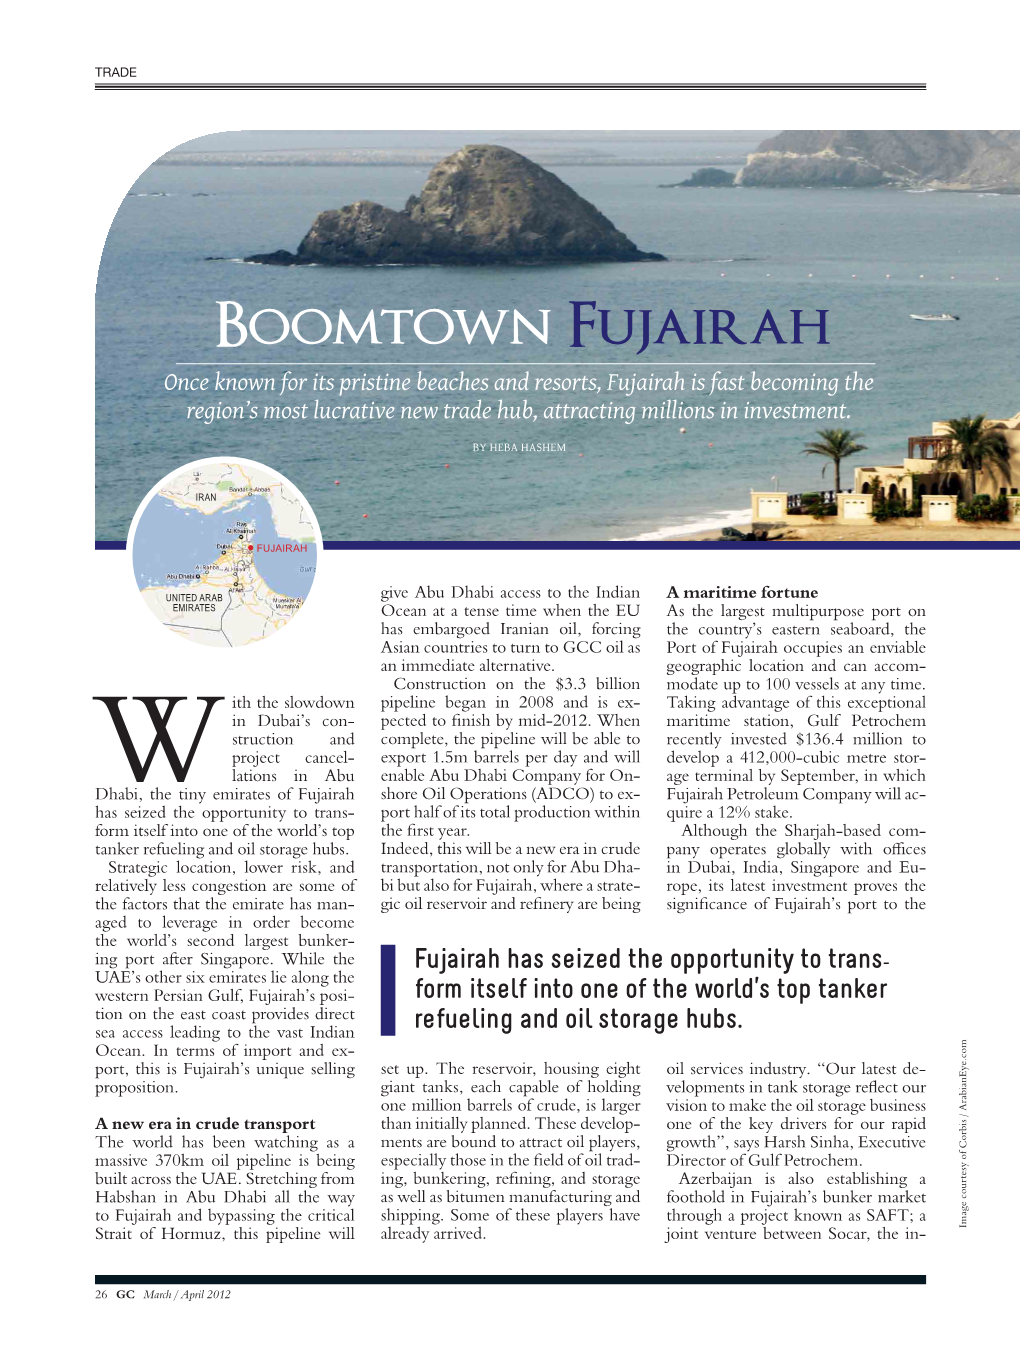 Boomtown Fujairah